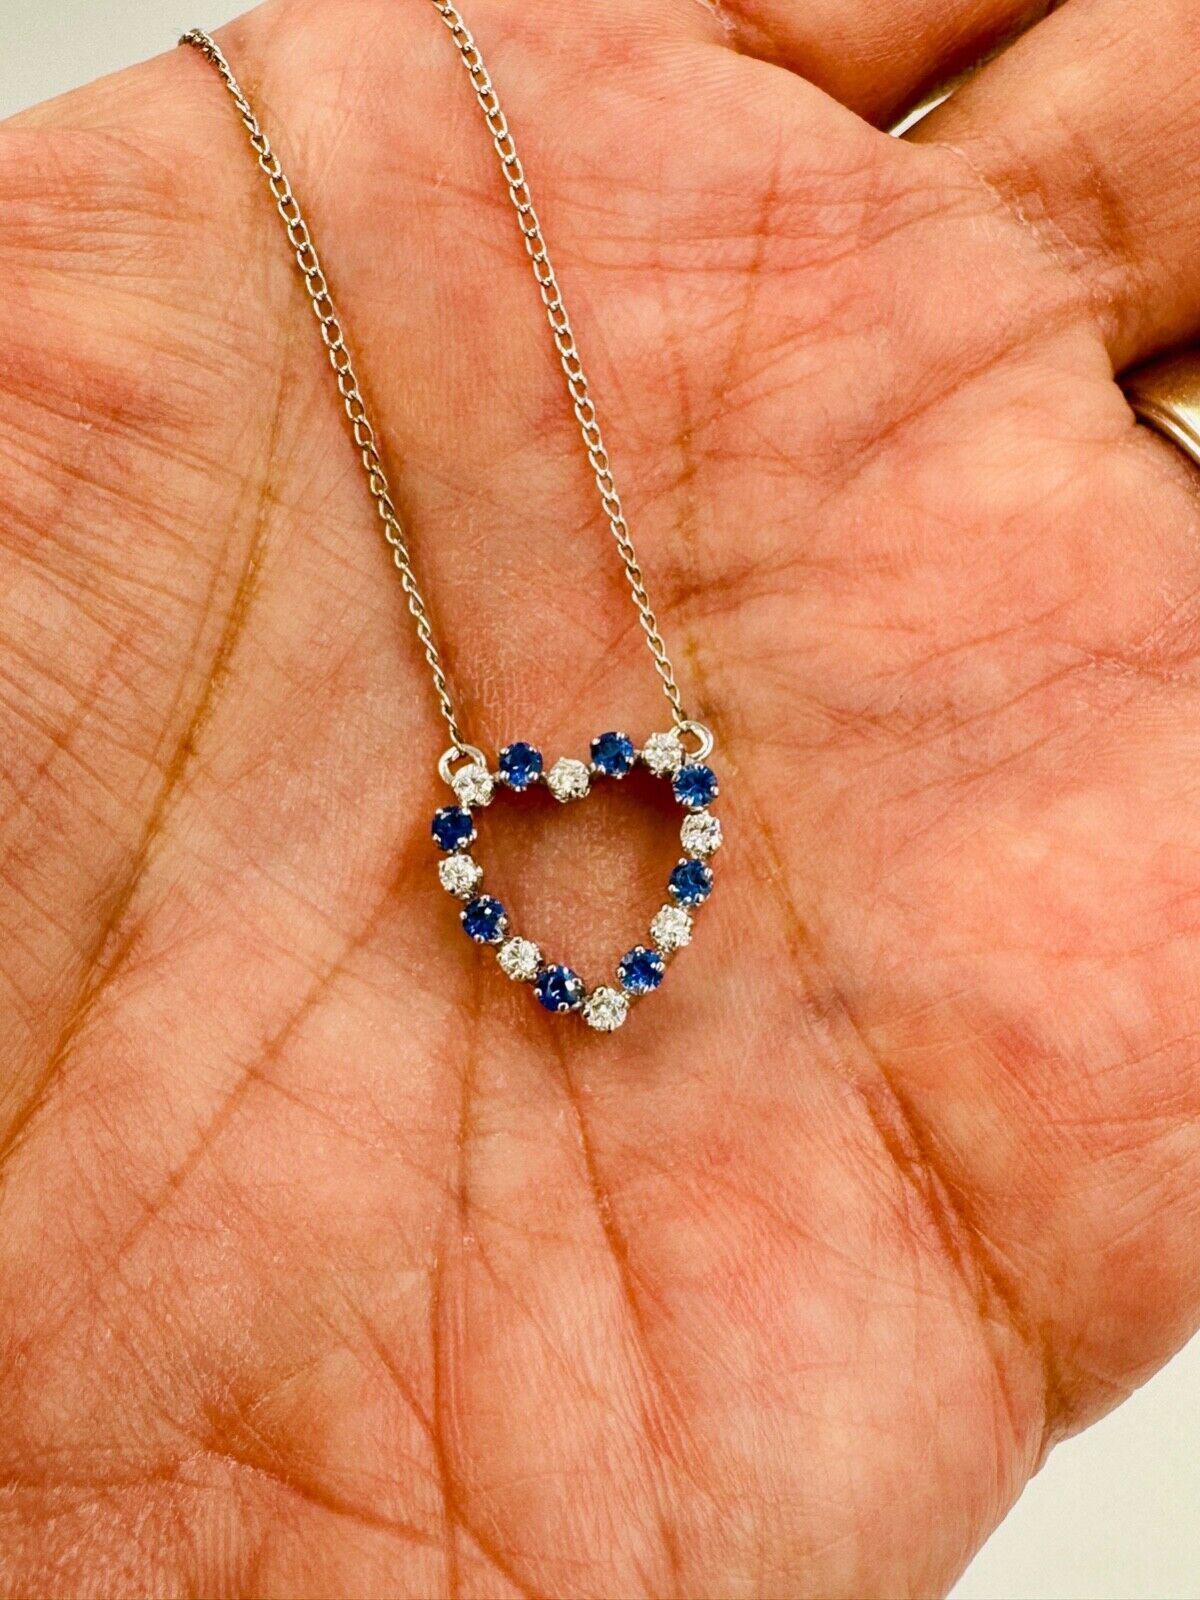 Estate 14k White Gold Diamond and Sapphire Heart Pendant Necklace